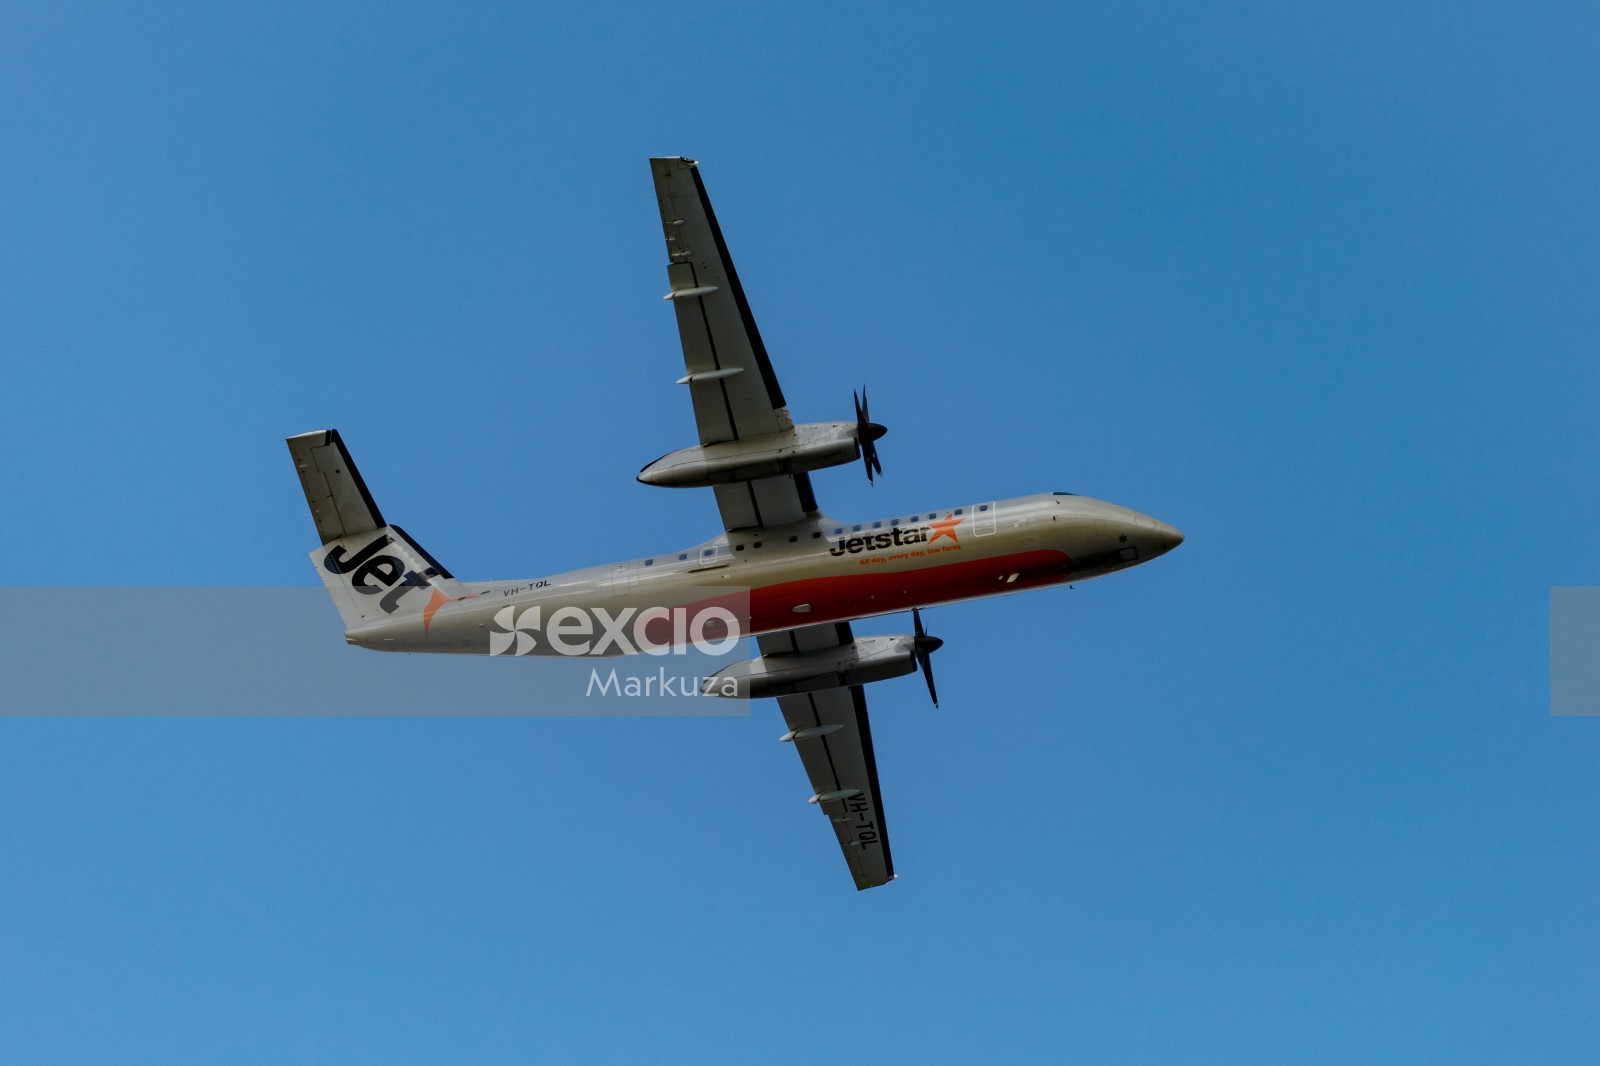 Jet Star twin-propeller plane